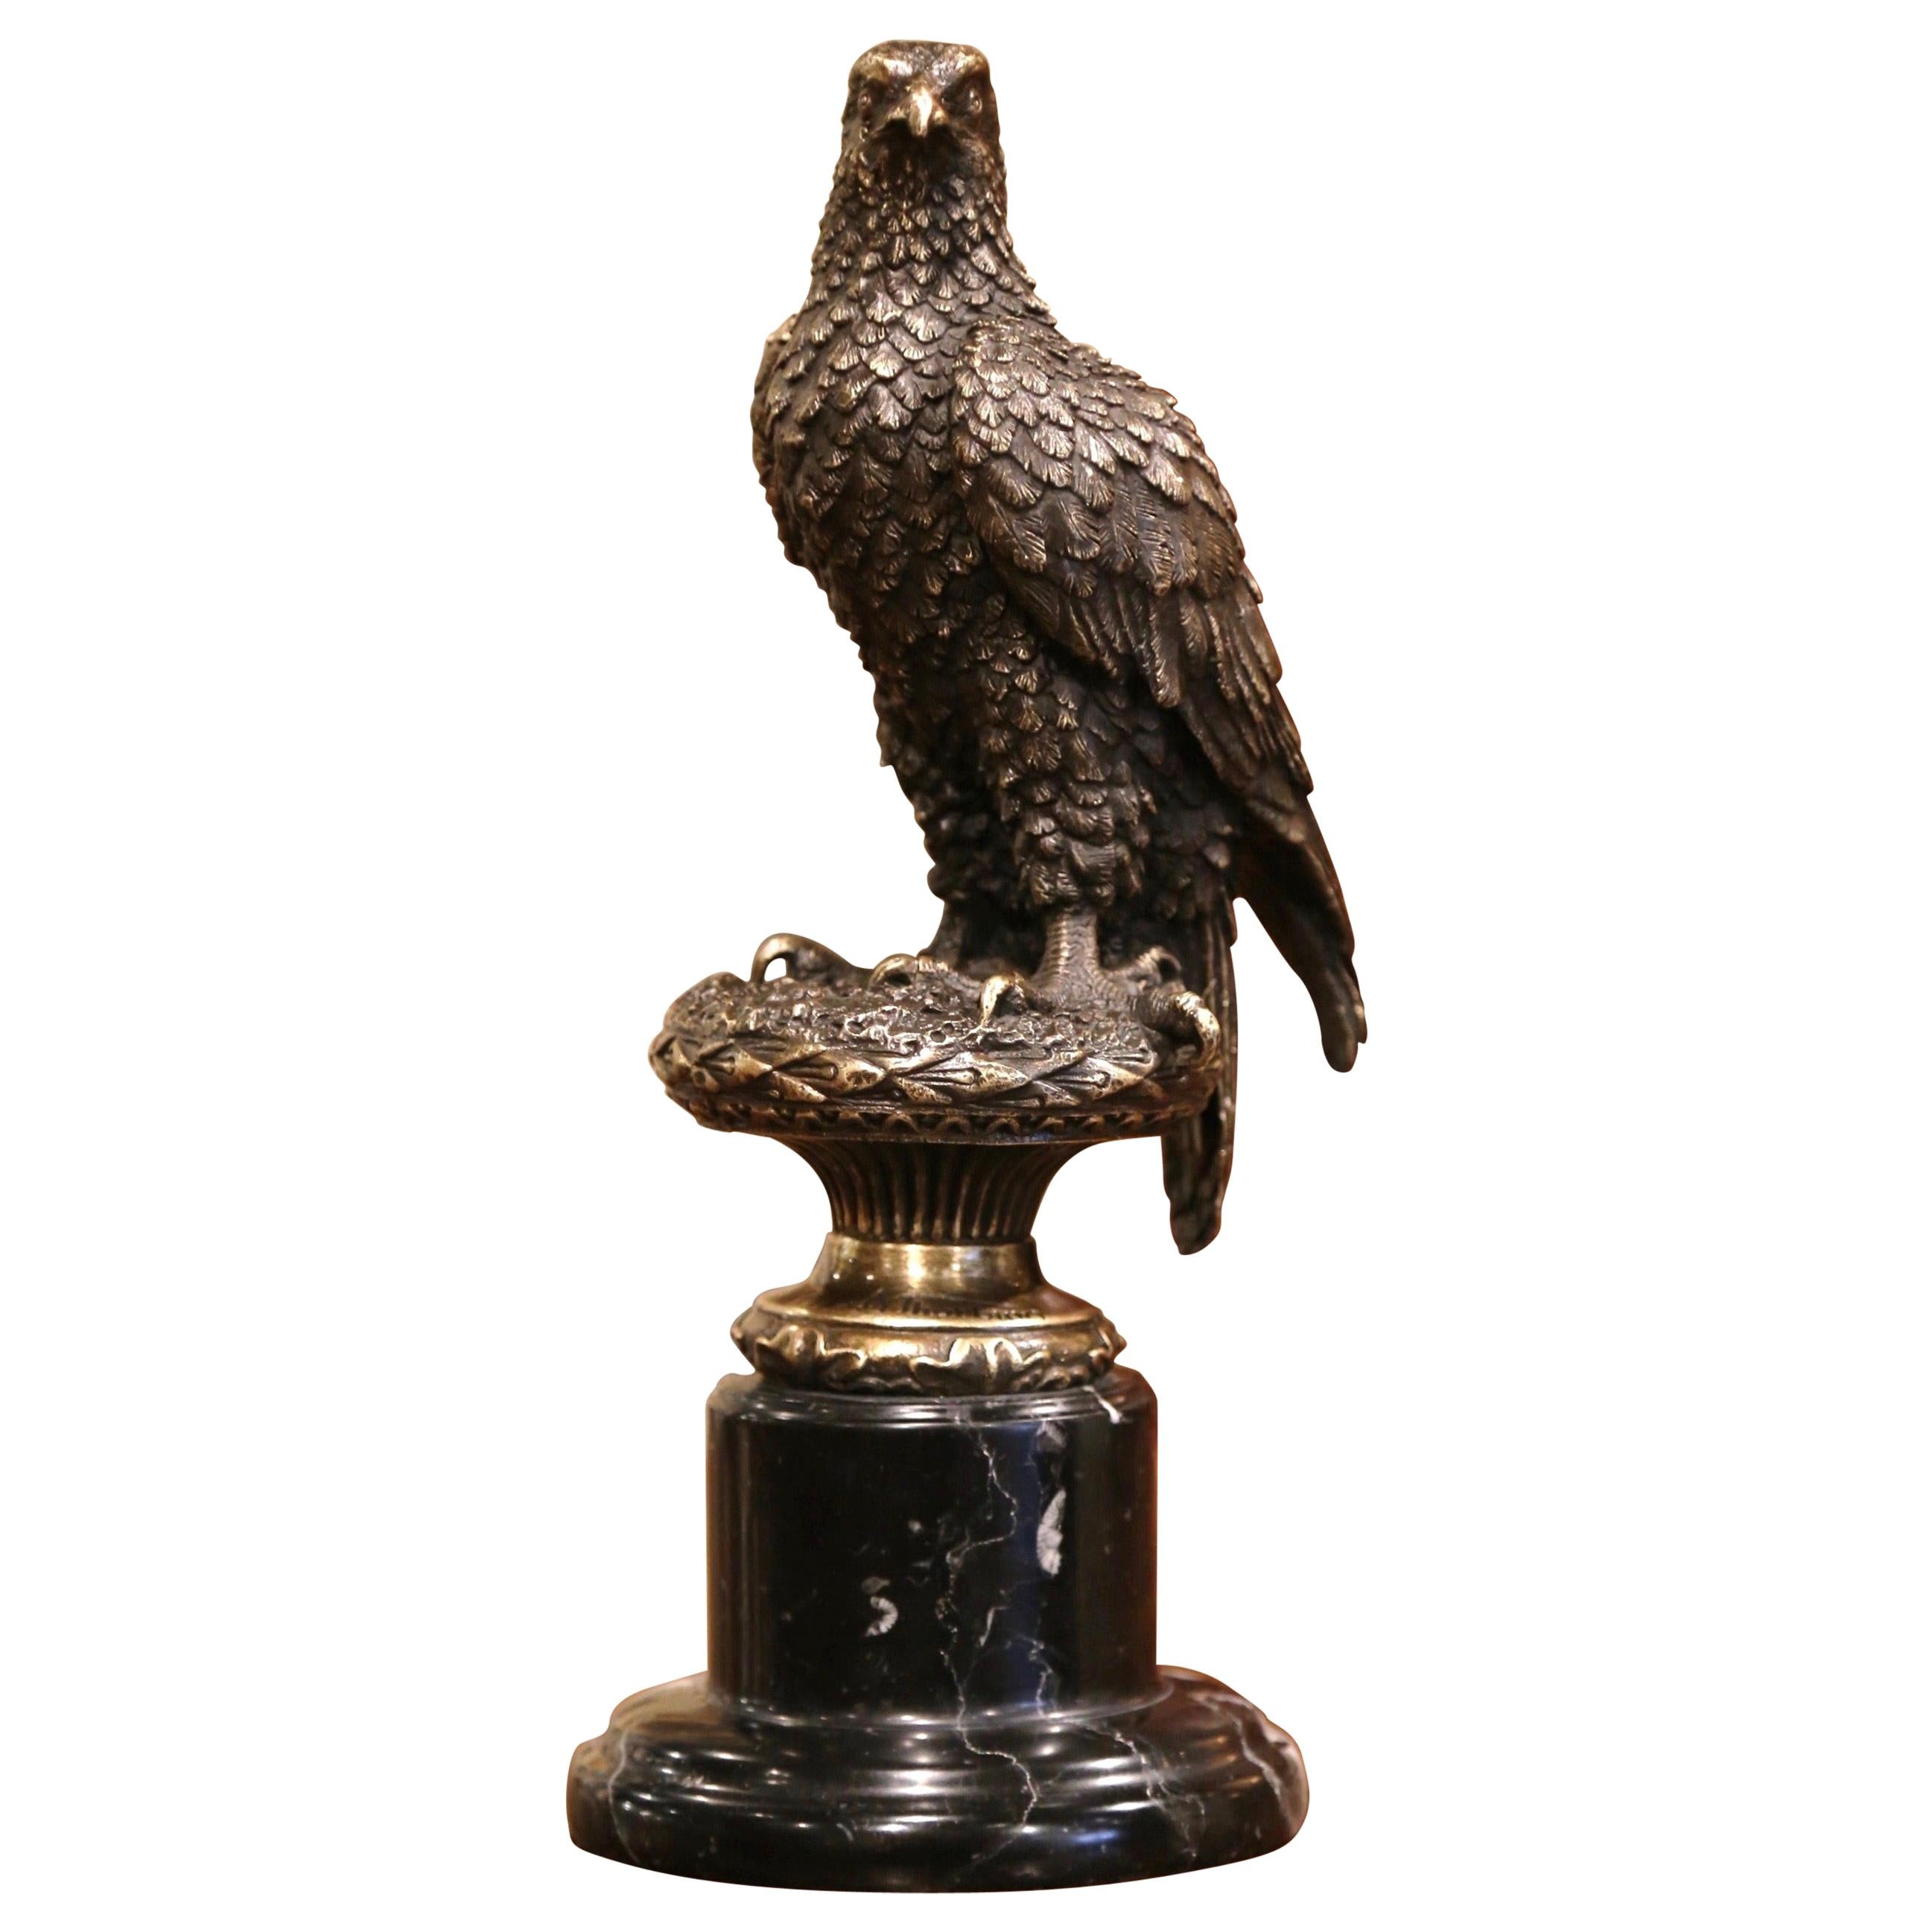 Midcentury Bronze Eagle Sculpture on Marble Base Signed Archibald Thorburn